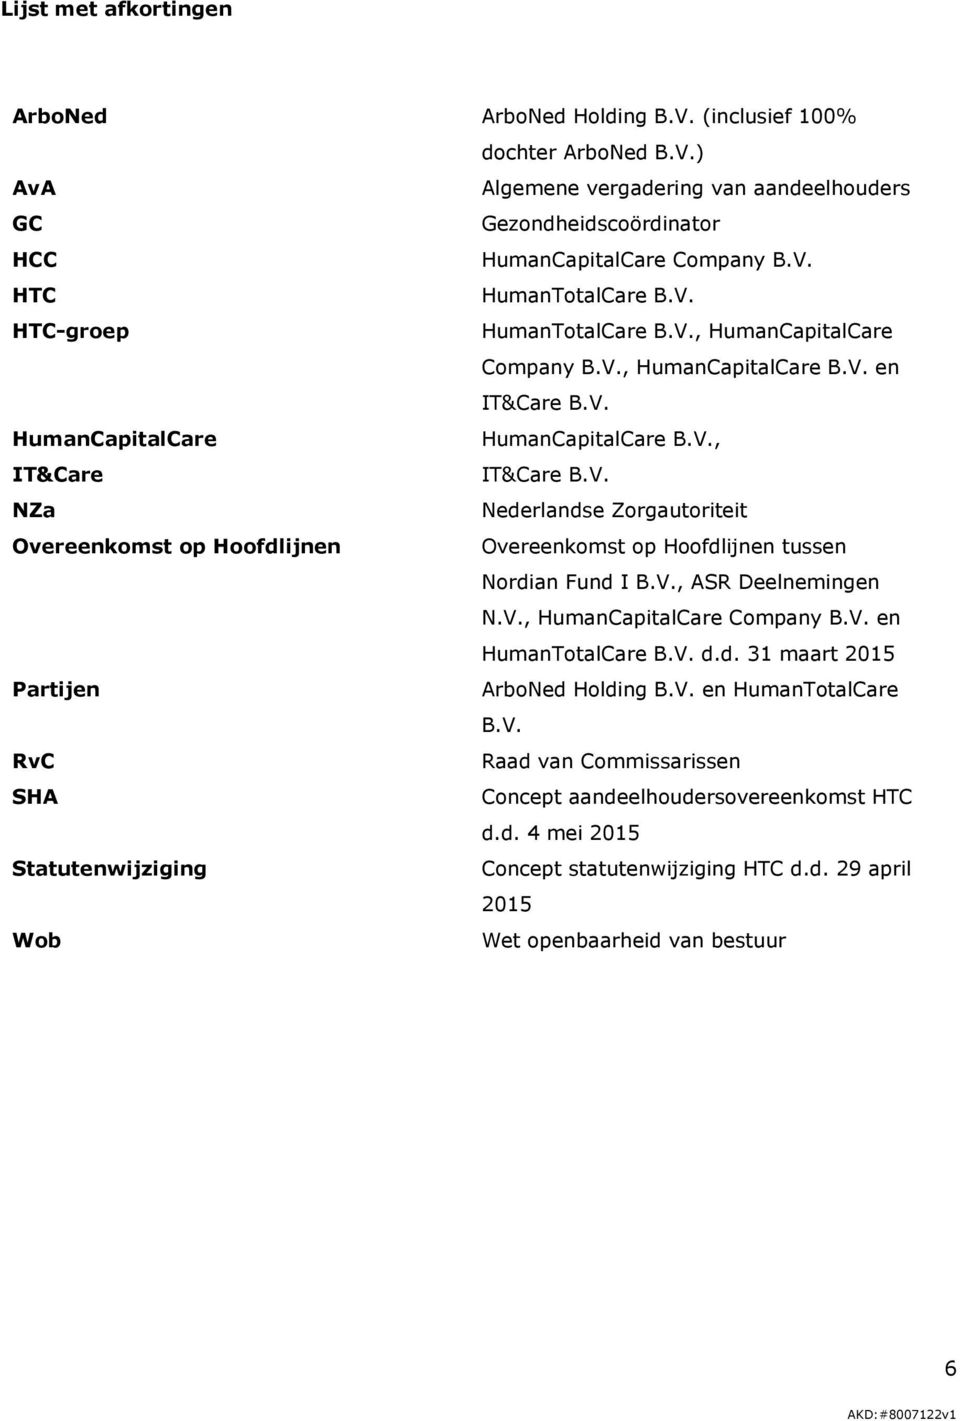 V., ASR Deelnemingen N.V., HumanCapitalCare Company B.V. en HumanTotalCare B.V. d.d. 31 maart 2015 Partijen ArboNed Holding B.V. en HumanTotalCare B.V. RvC Raad van Commissarissen SHA Concept aandeelhoudersovereenkomst HTC d.